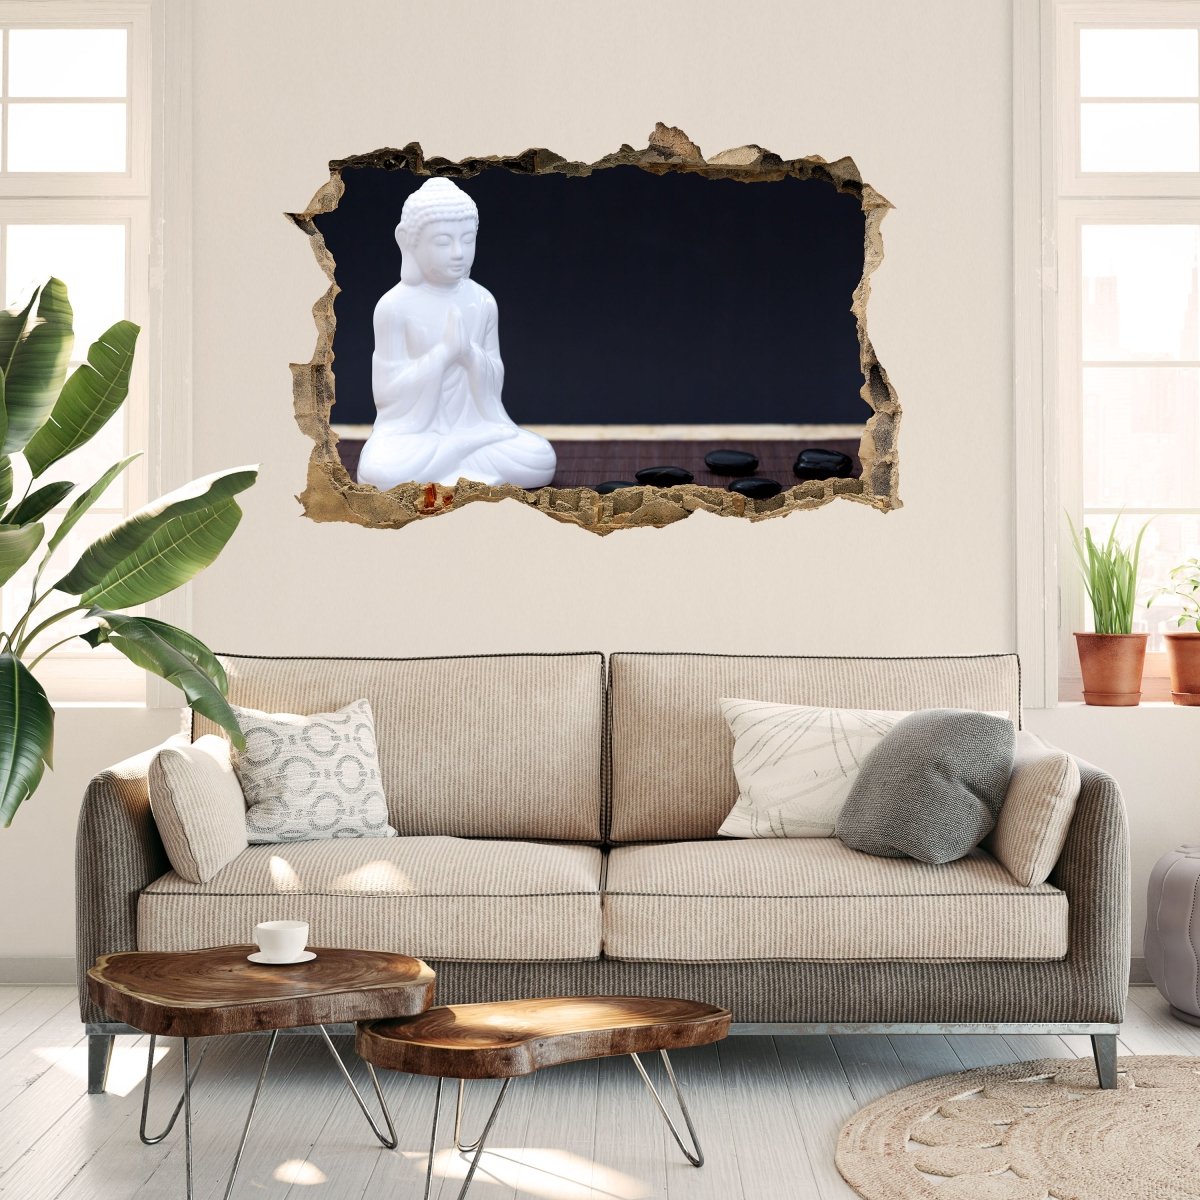 Sticker mural 3D personnage blanc en posture de méditation - Wall Decal M0967